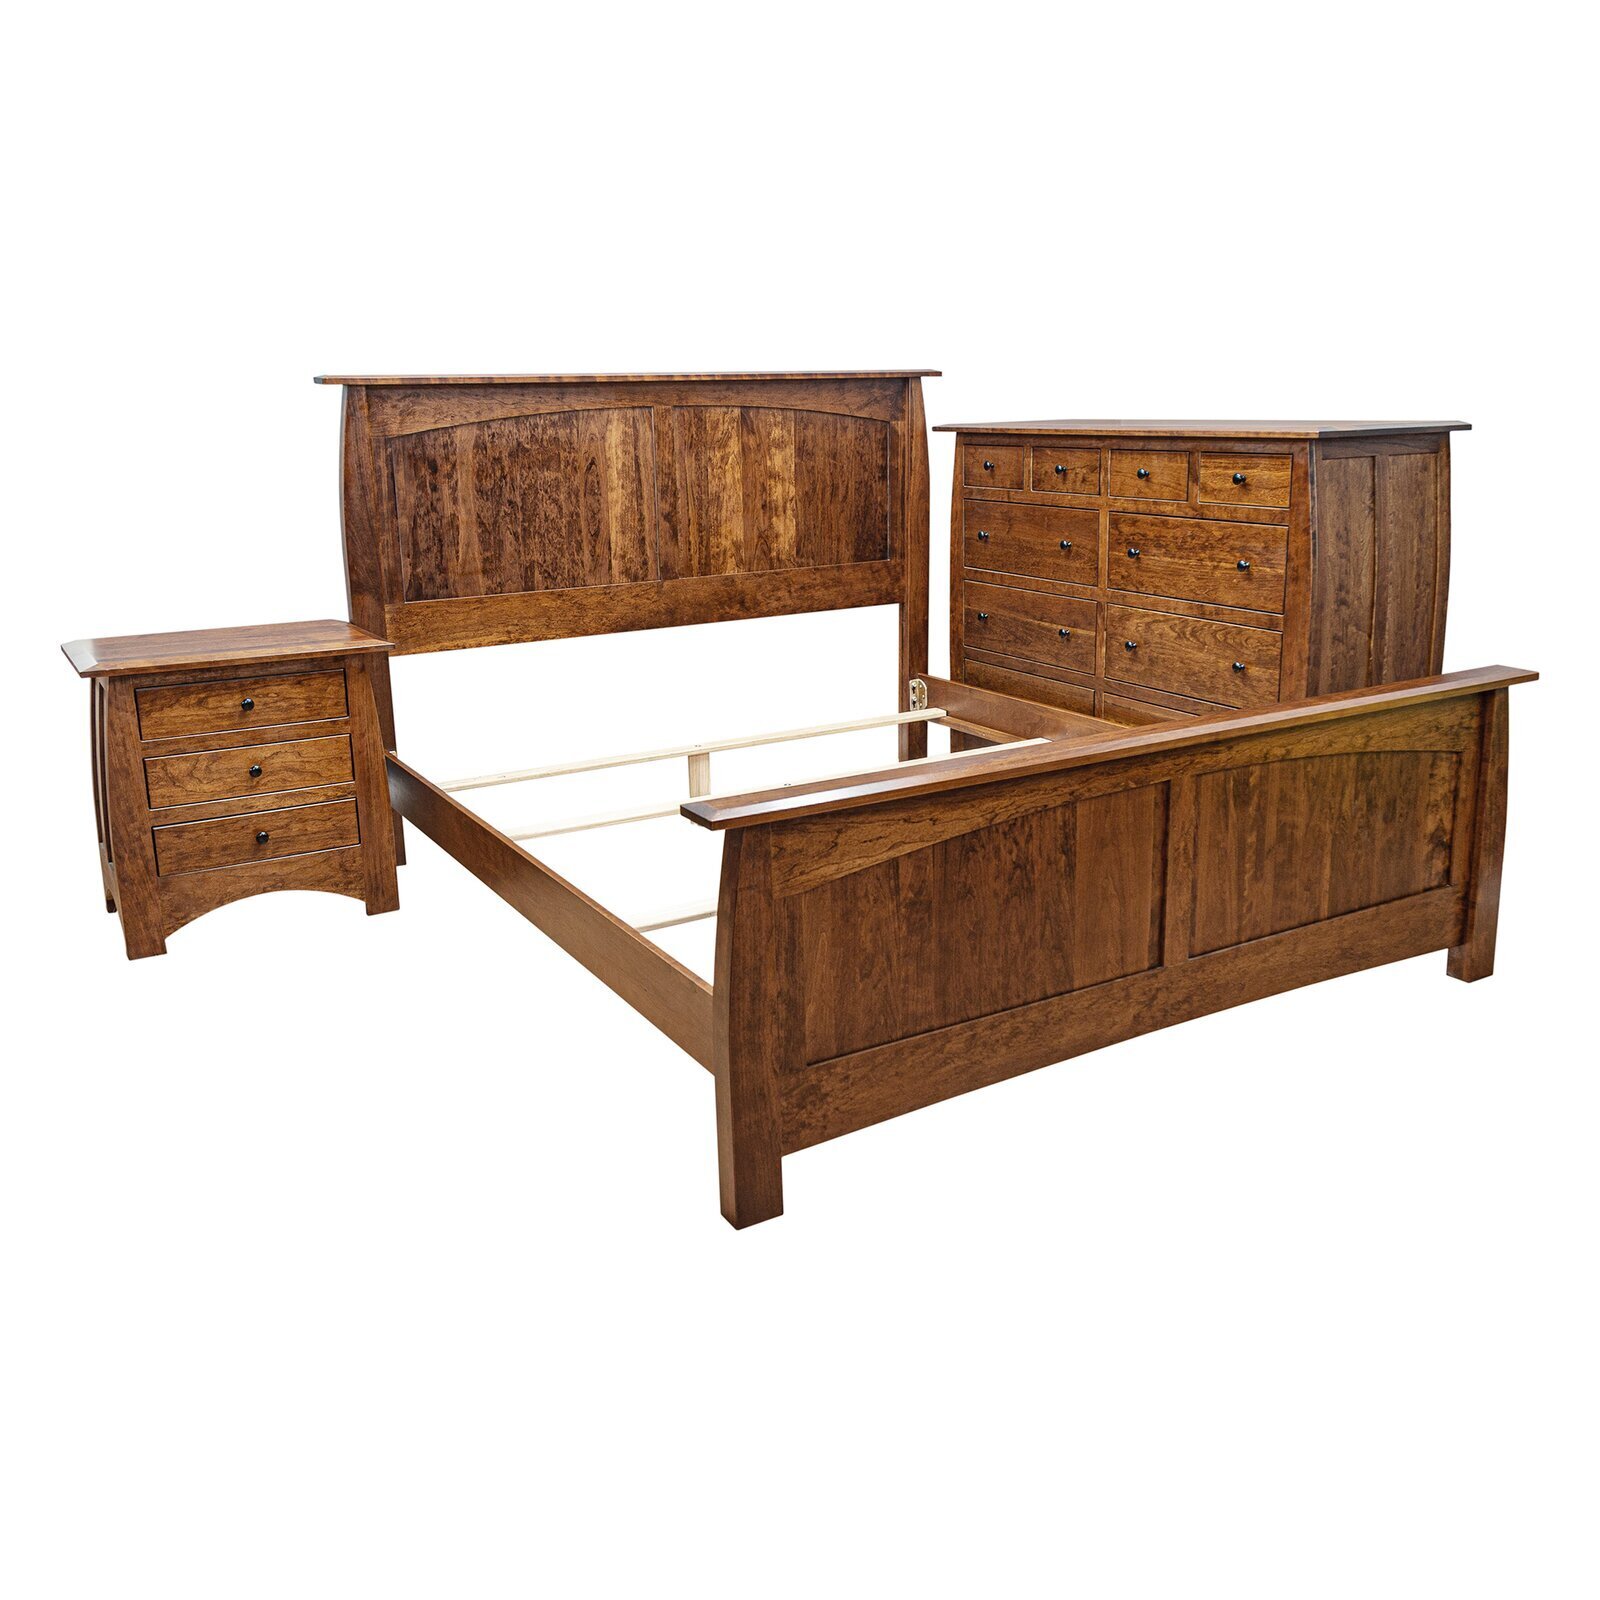 Customizable dark cherry wood bedroom furniture set with dresser